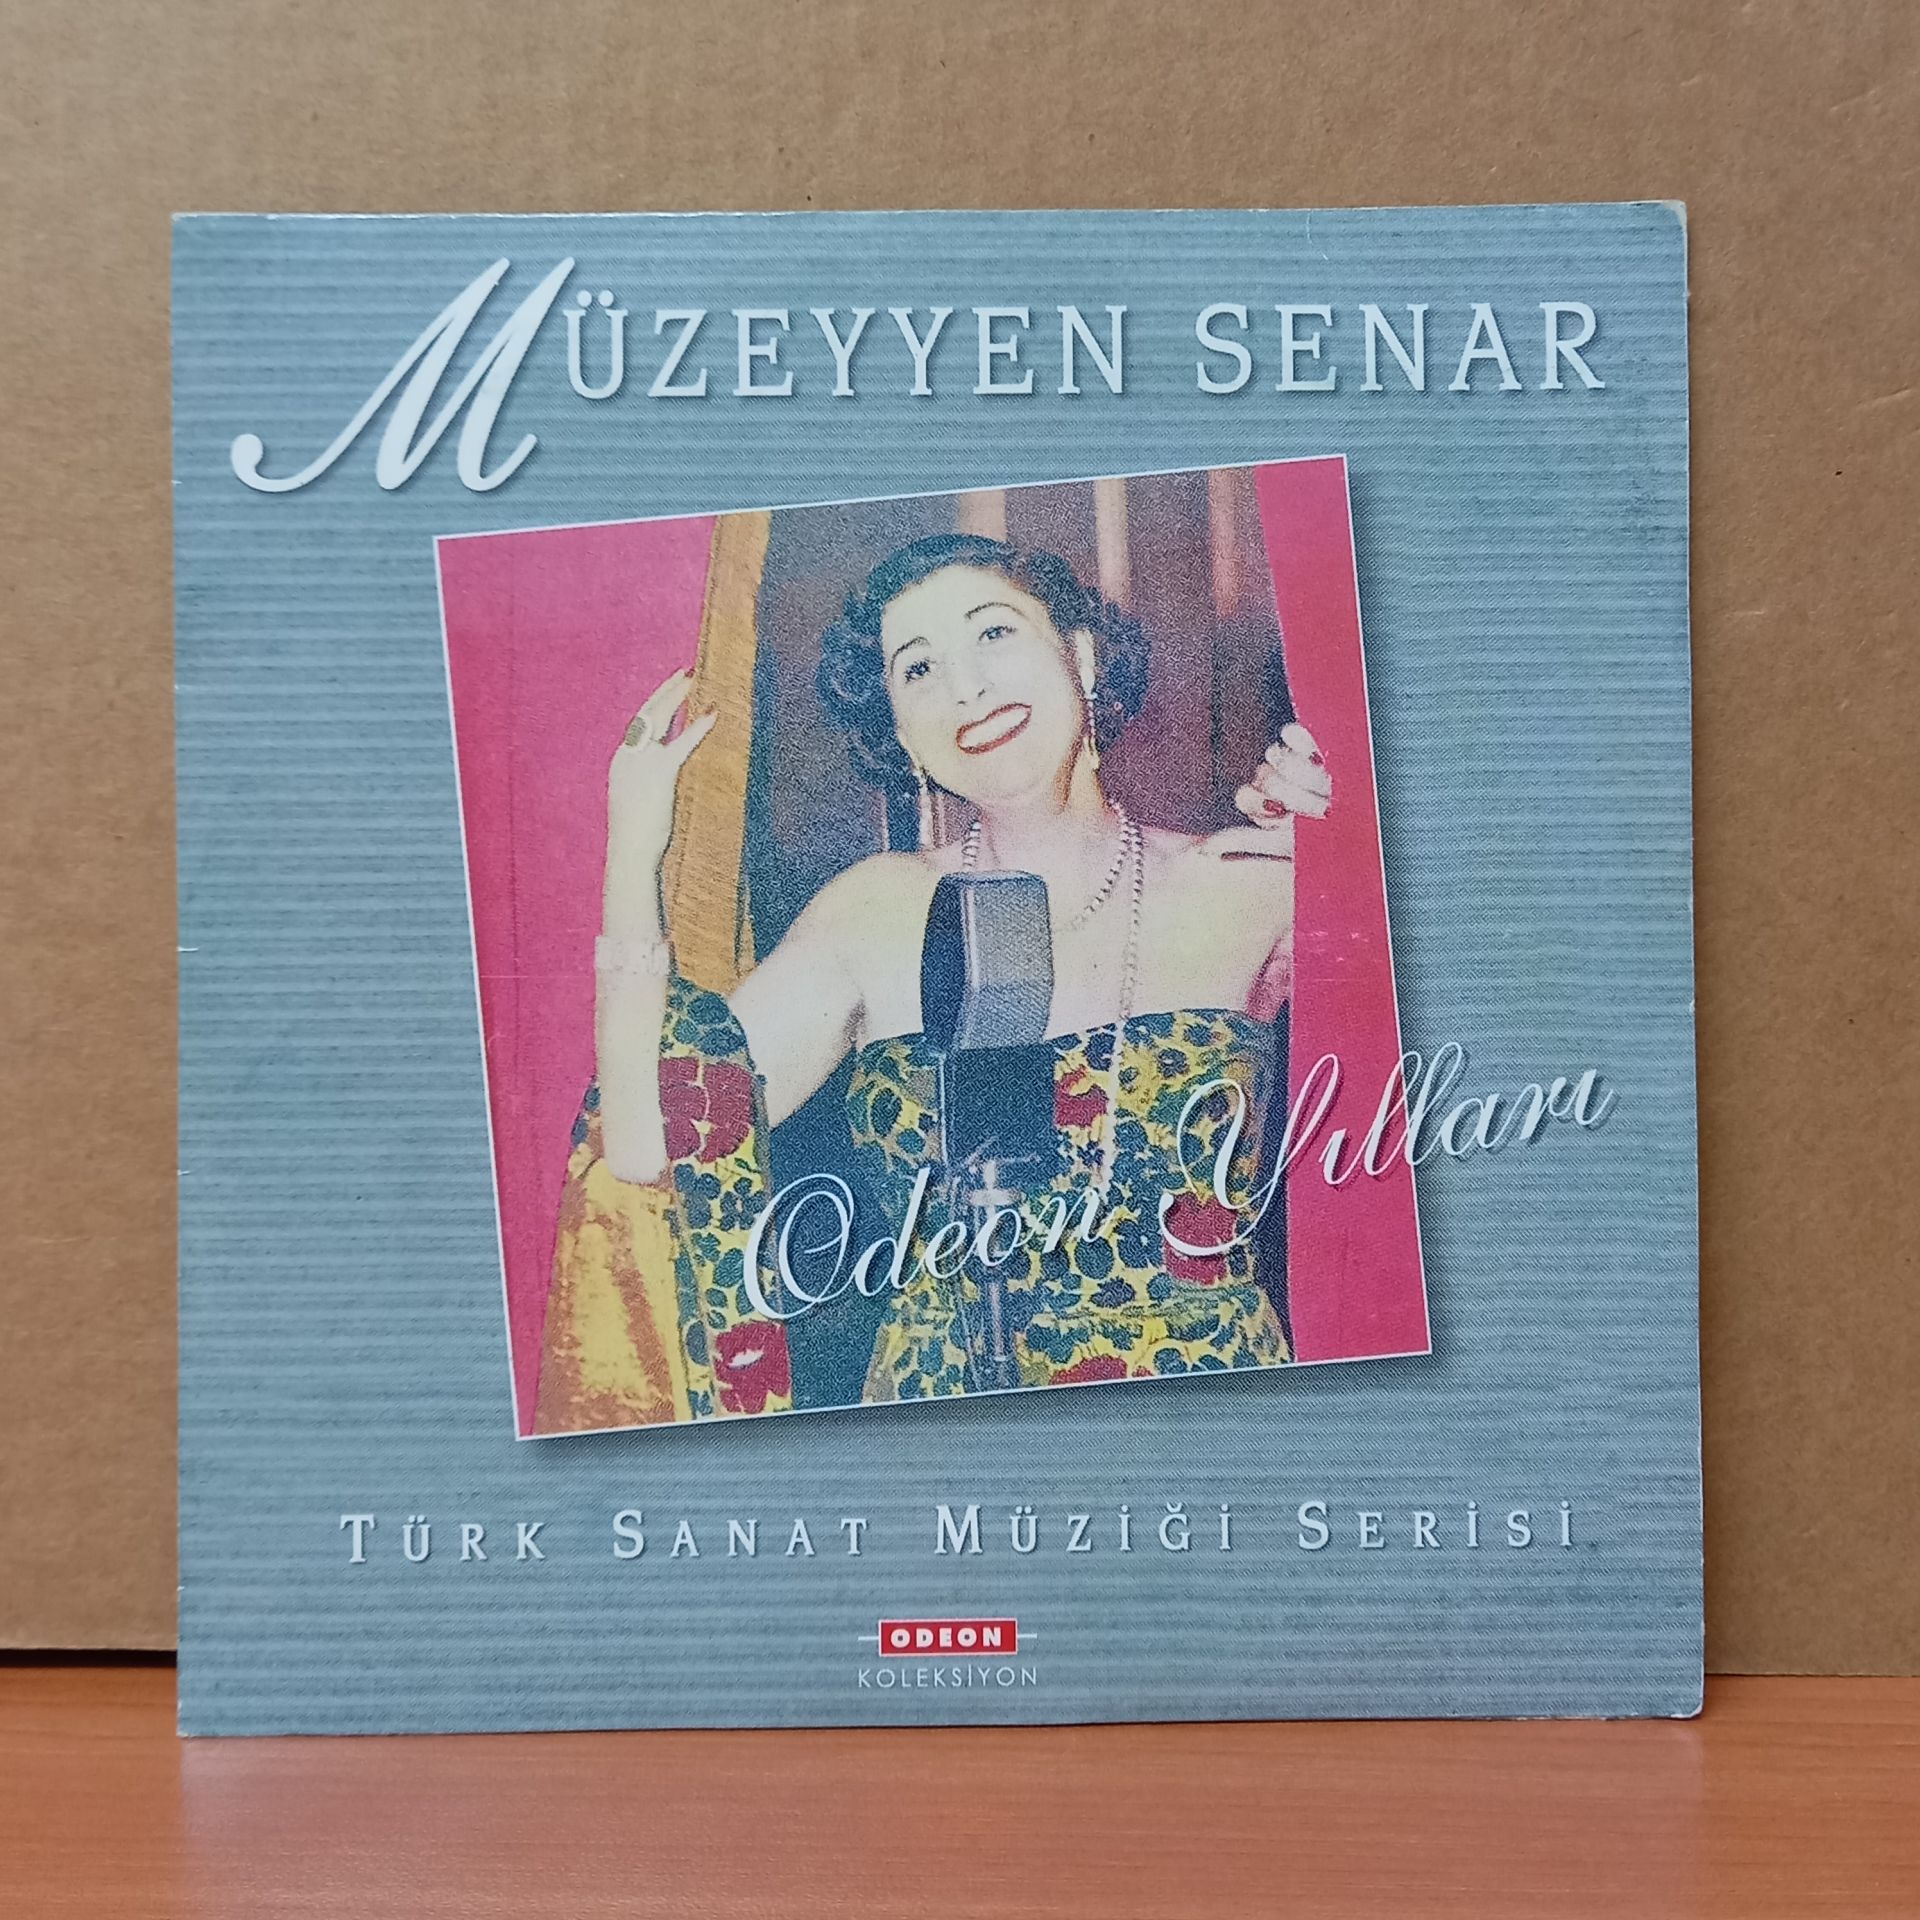 MÜZEYYEN SENAR - ODEON YILLARI (2006) - CD 2.EL